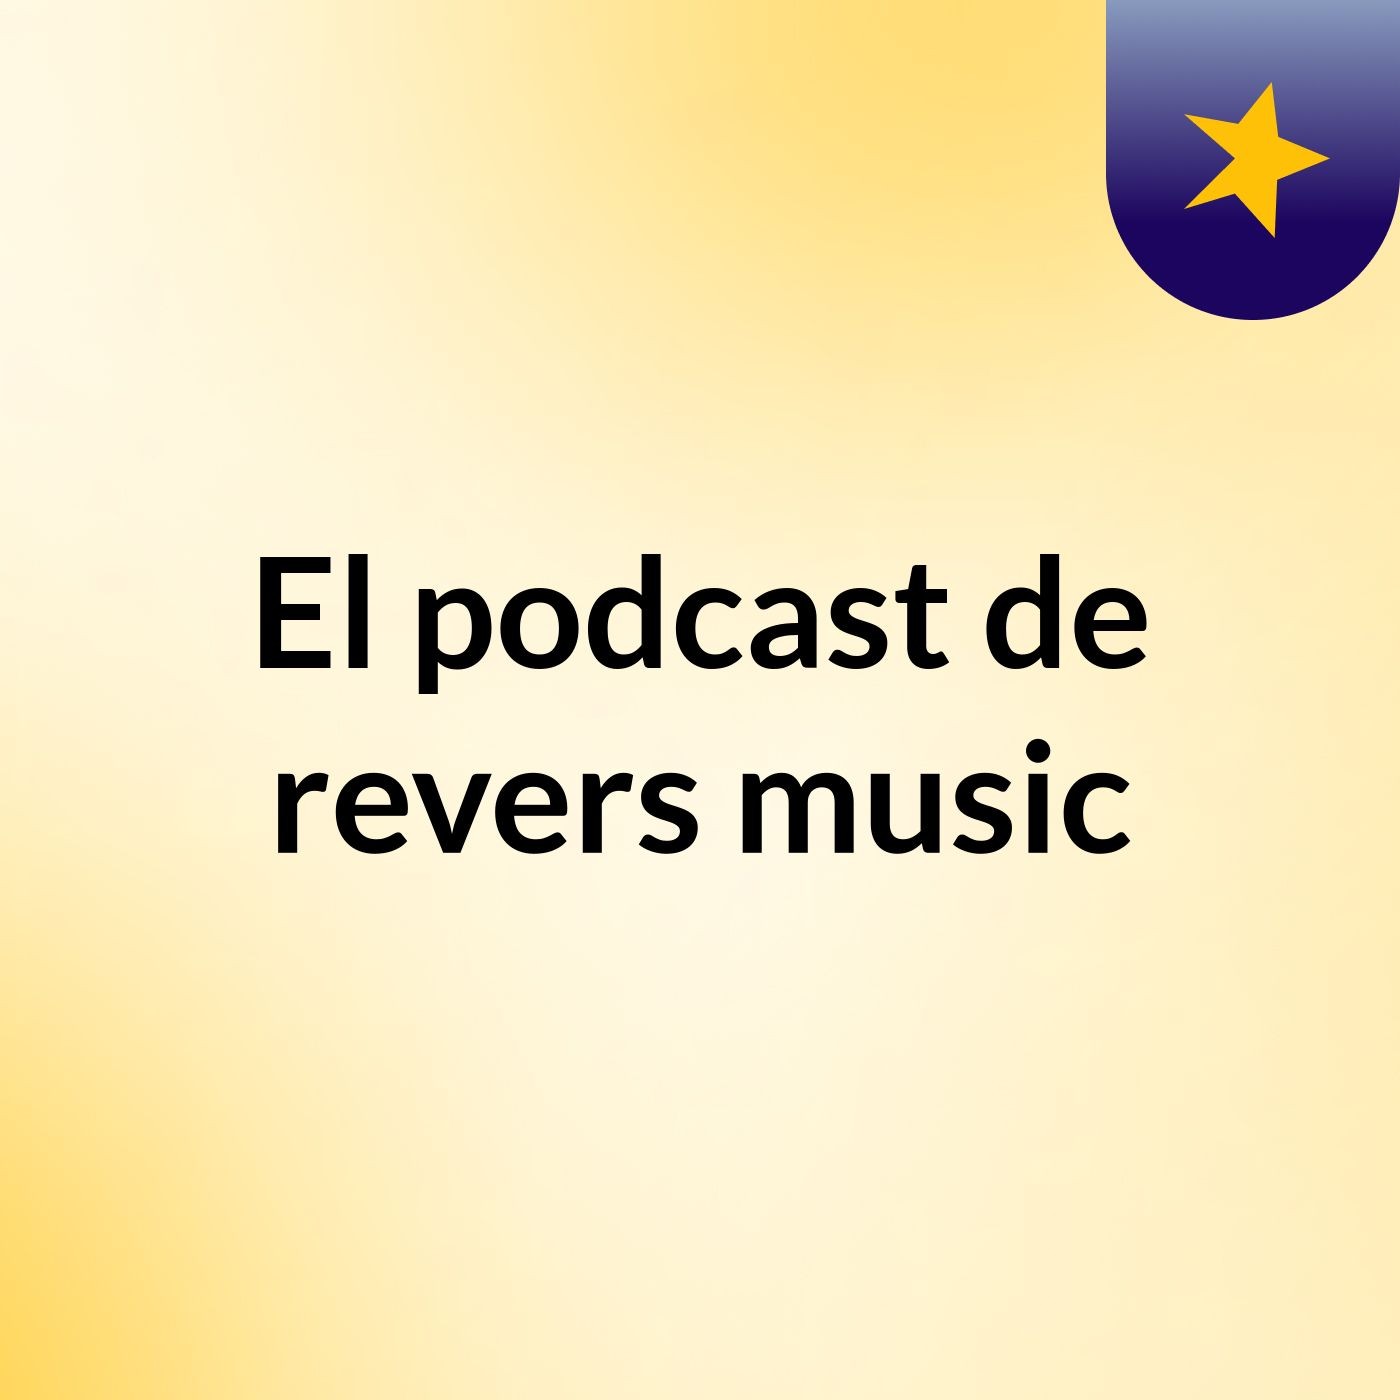 El podcast de revers music